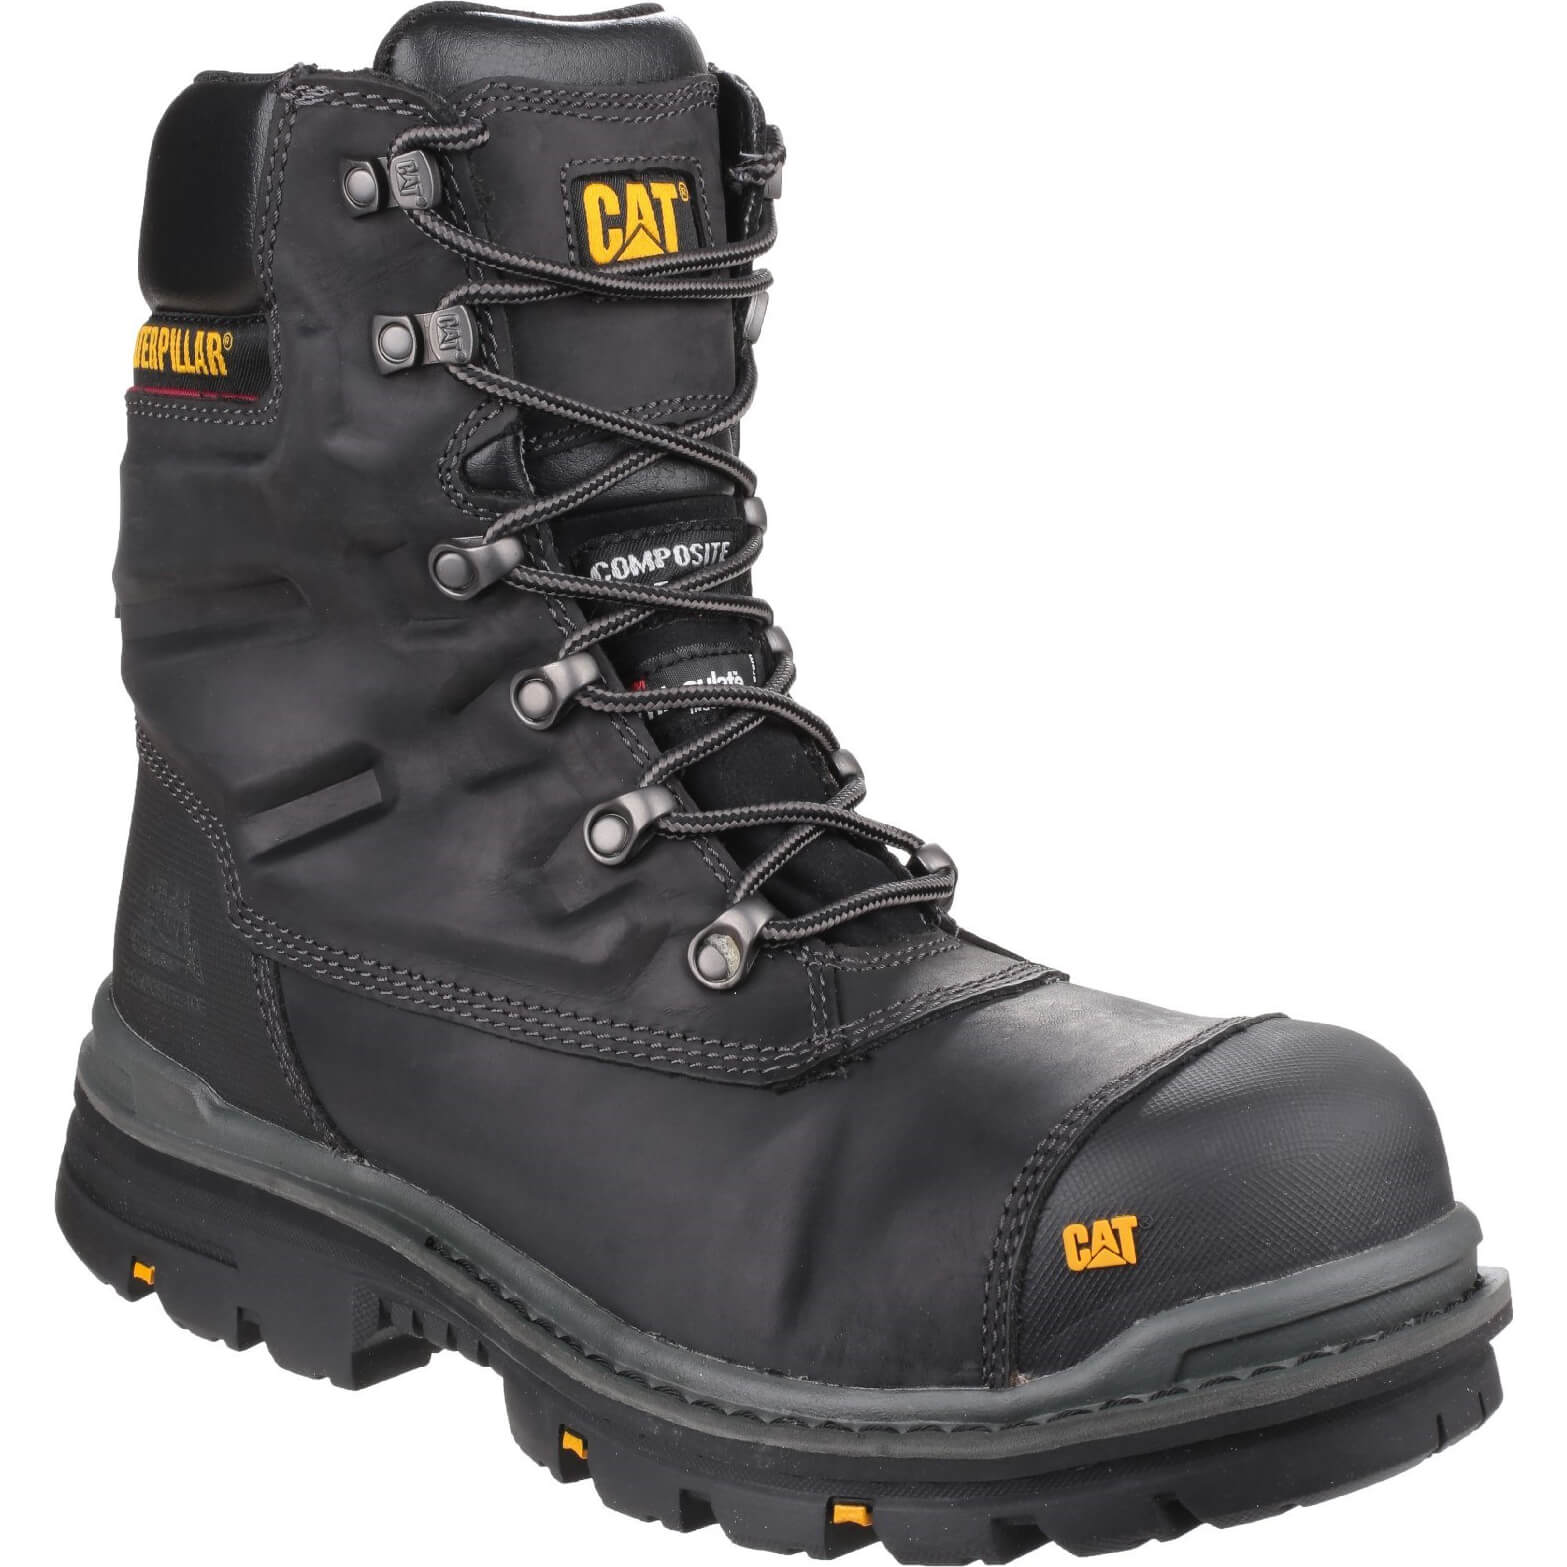 Caterpillar Mens Premier Waterproof Safety Boots Black Size 12